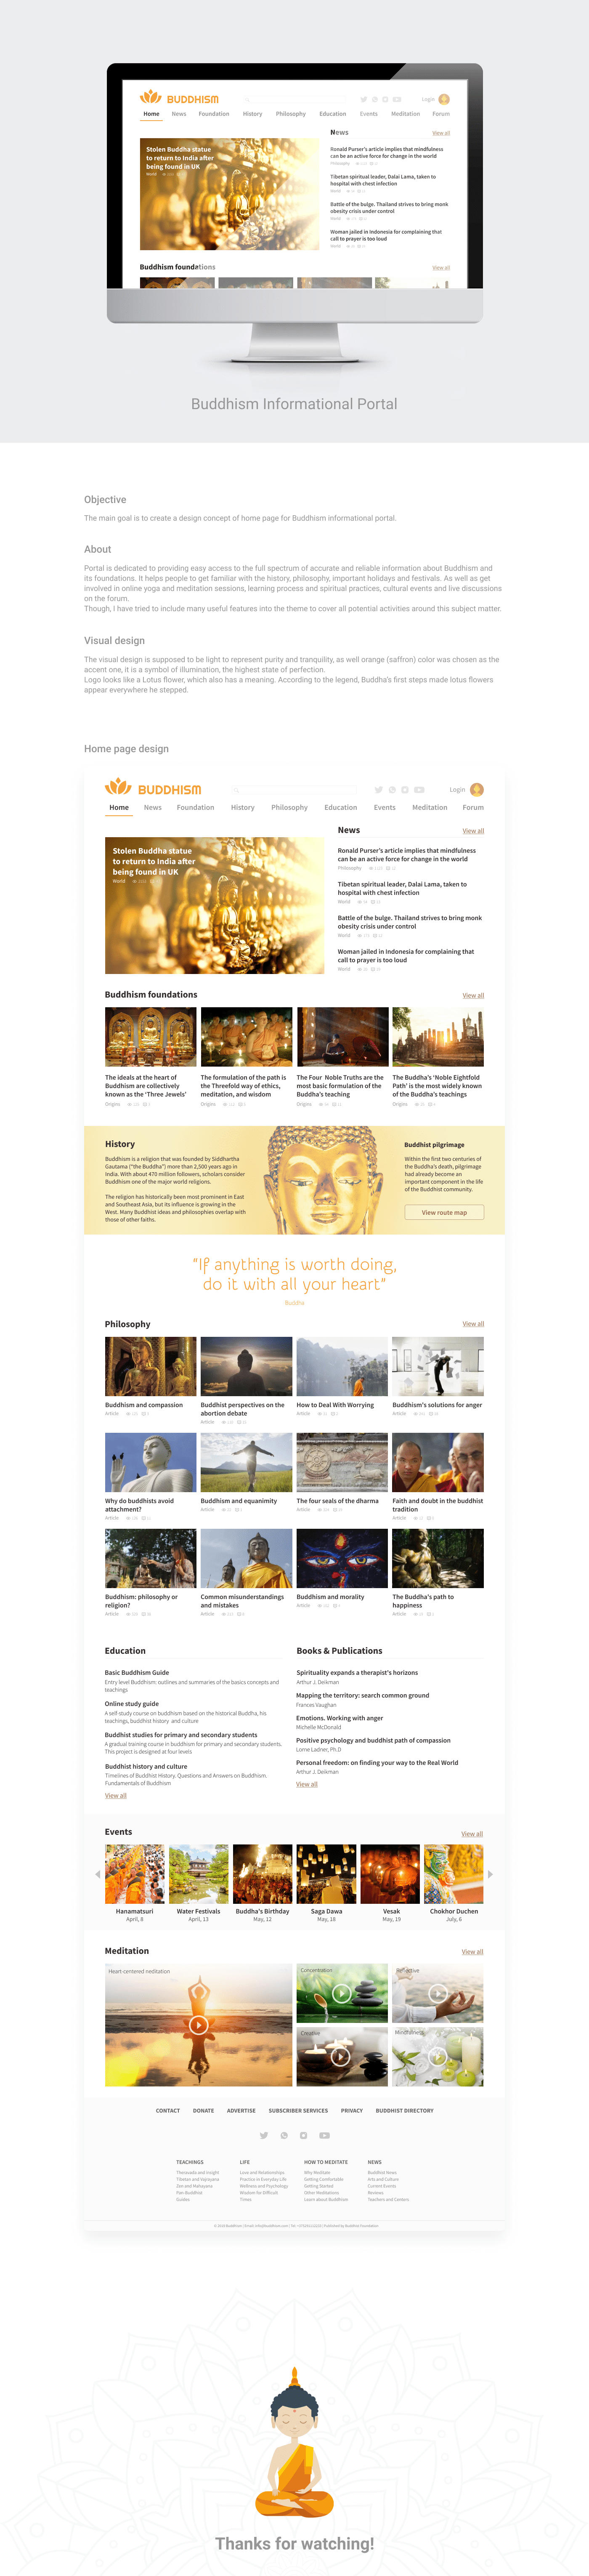 UI ux design Web buddhism religion internet page flat graphics trend